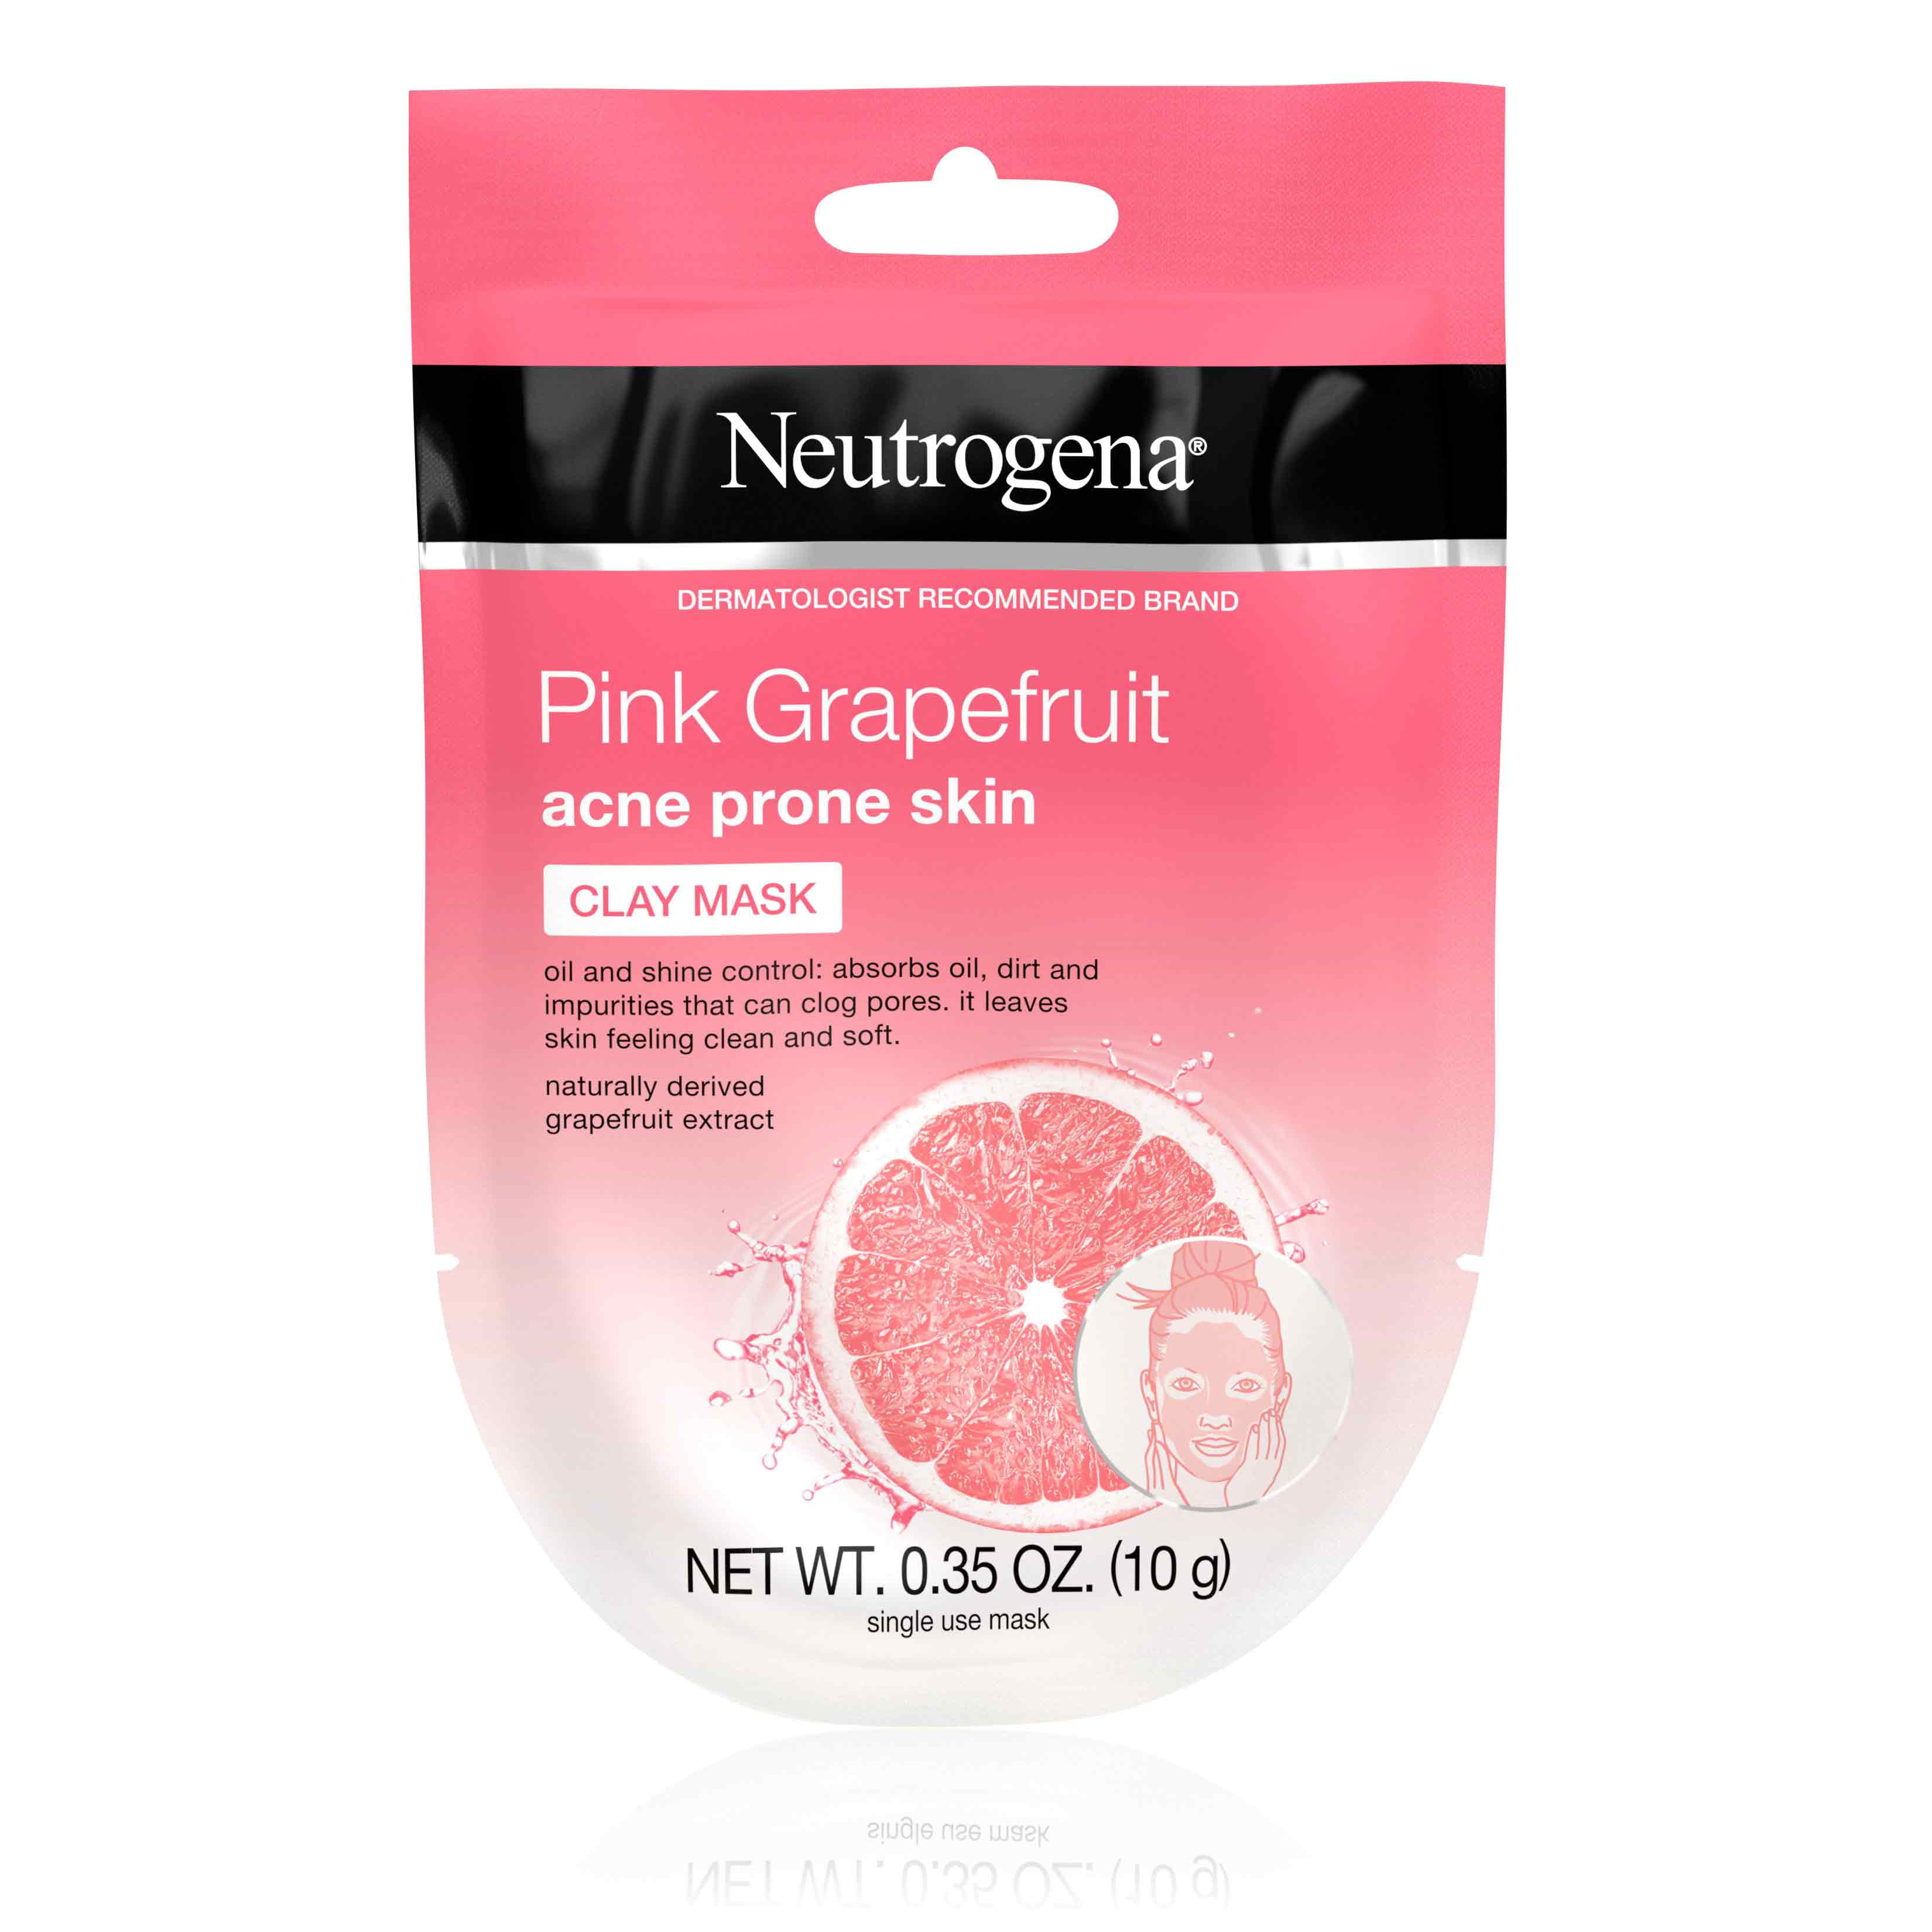 Neutrogena® Pink Grapefruit Acne Prone Skin Clay Mask